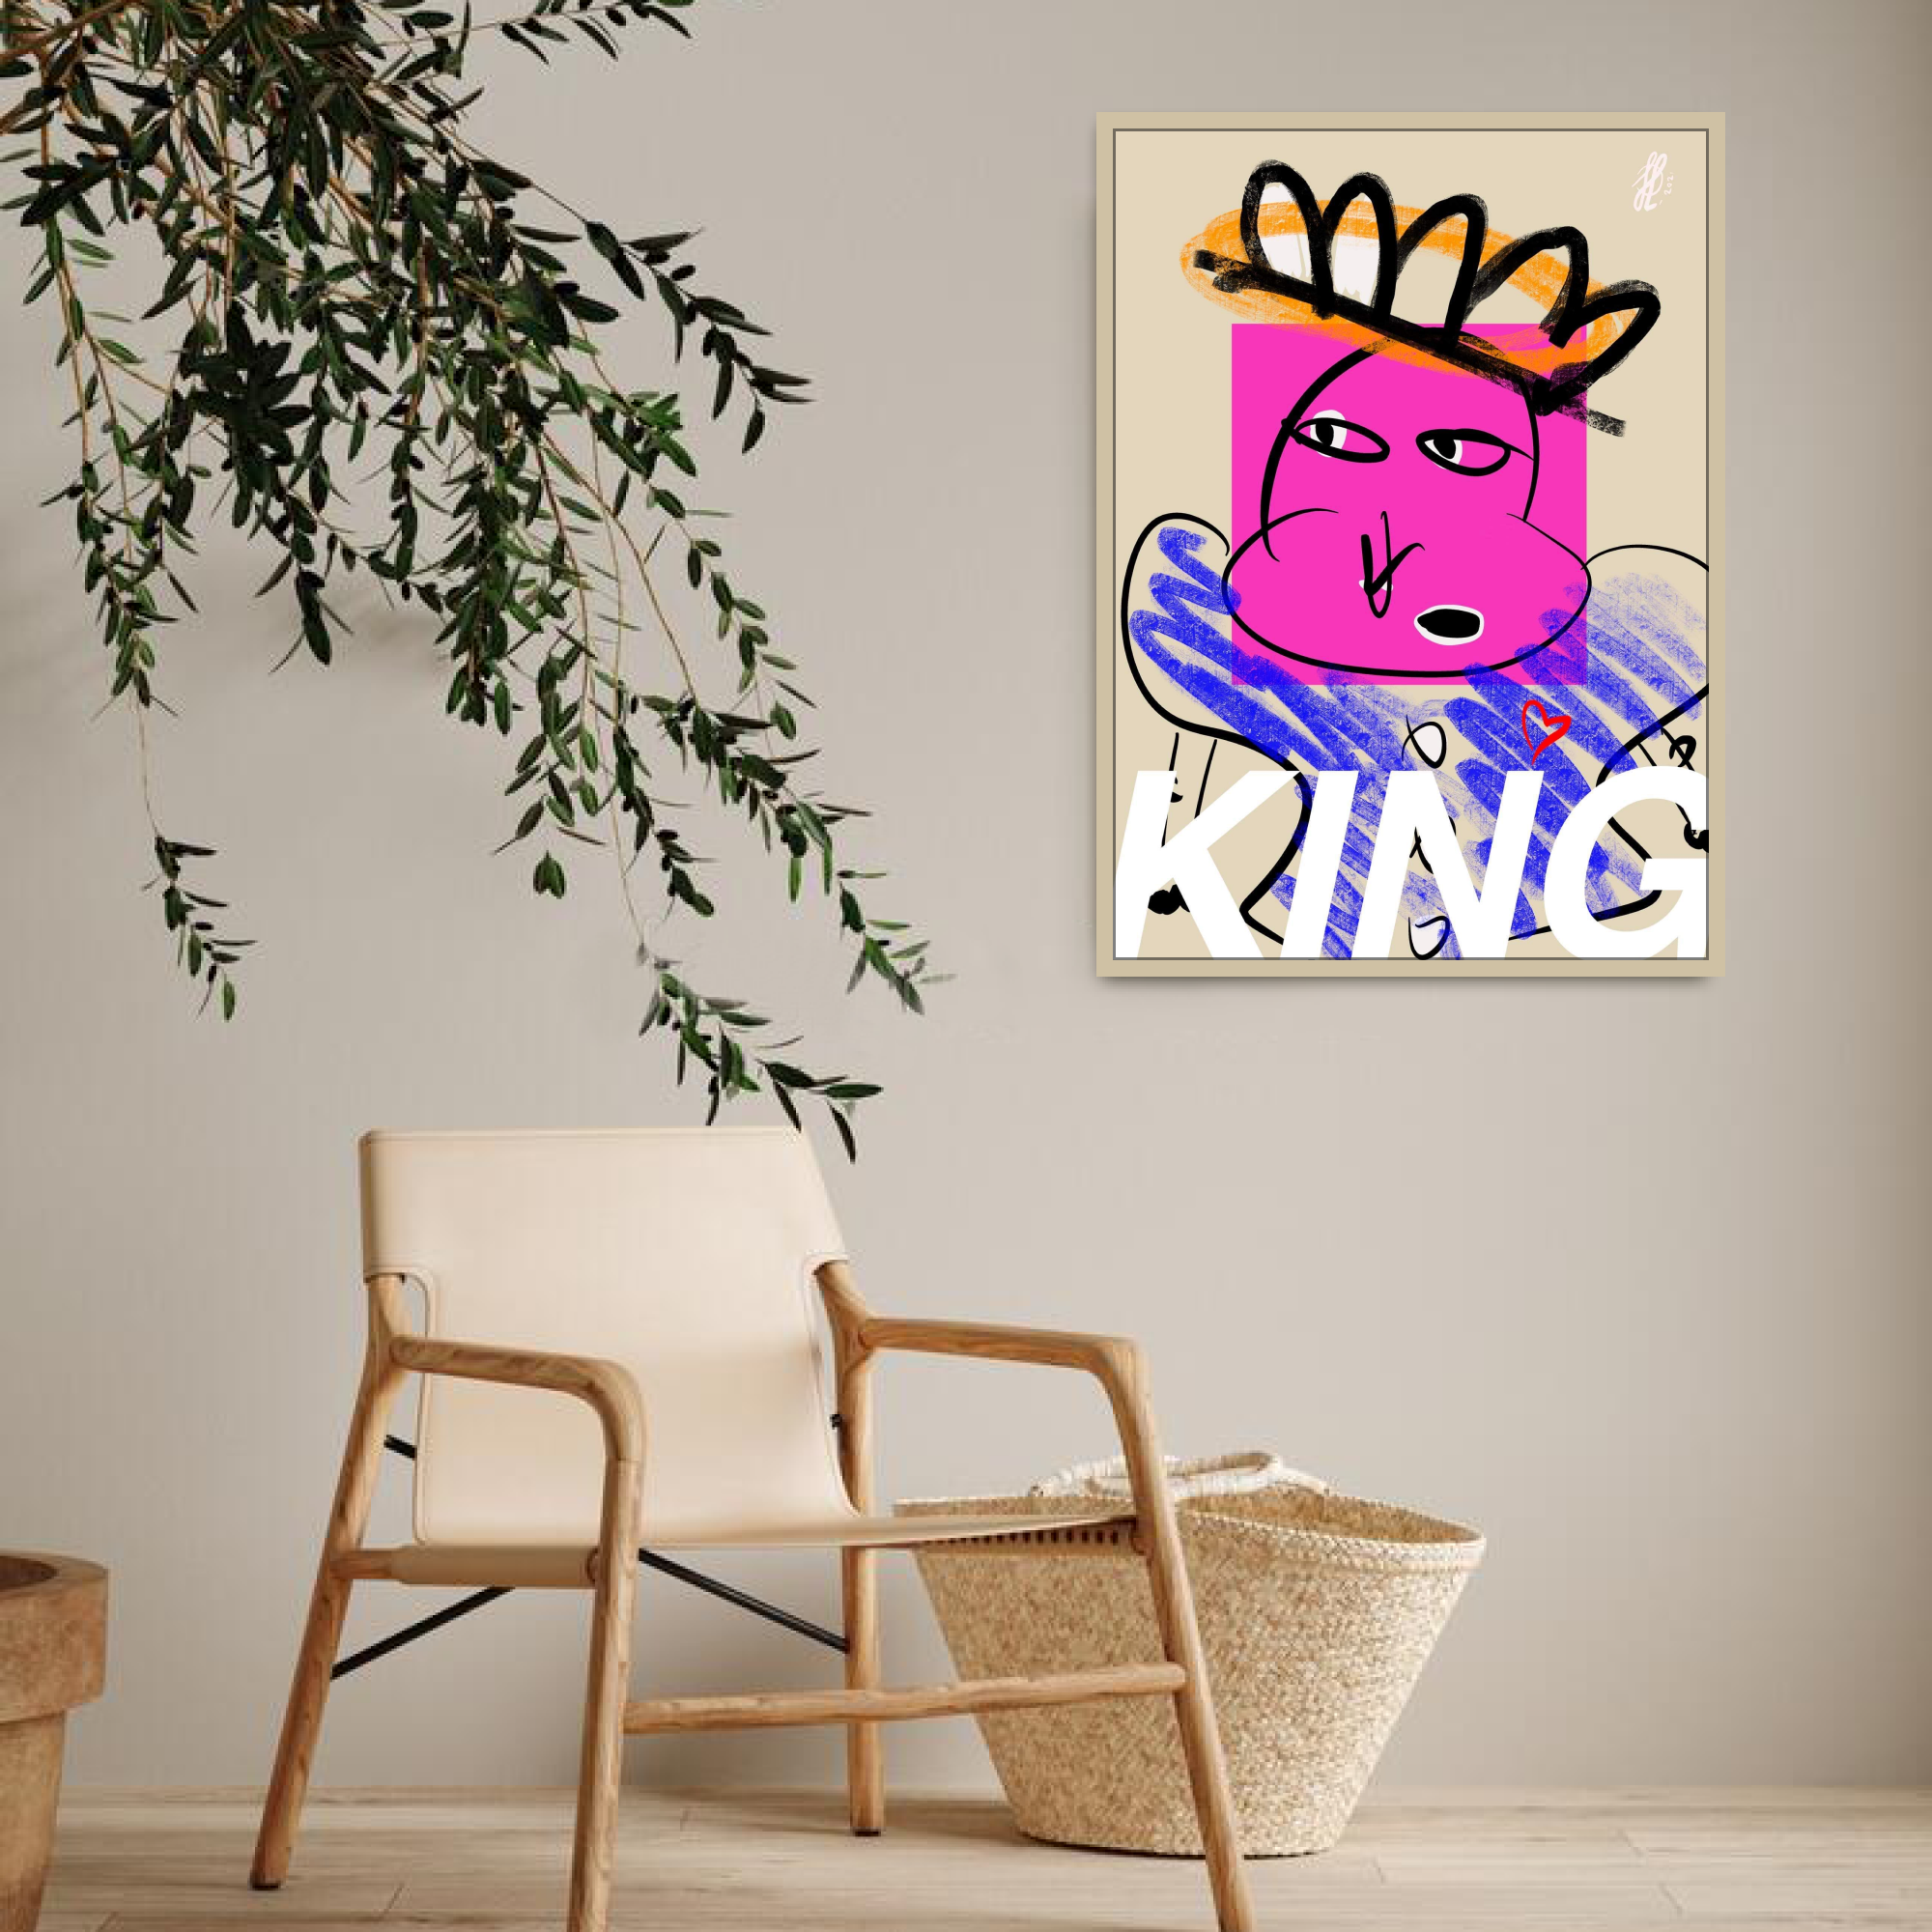 Canvas Print: "King"